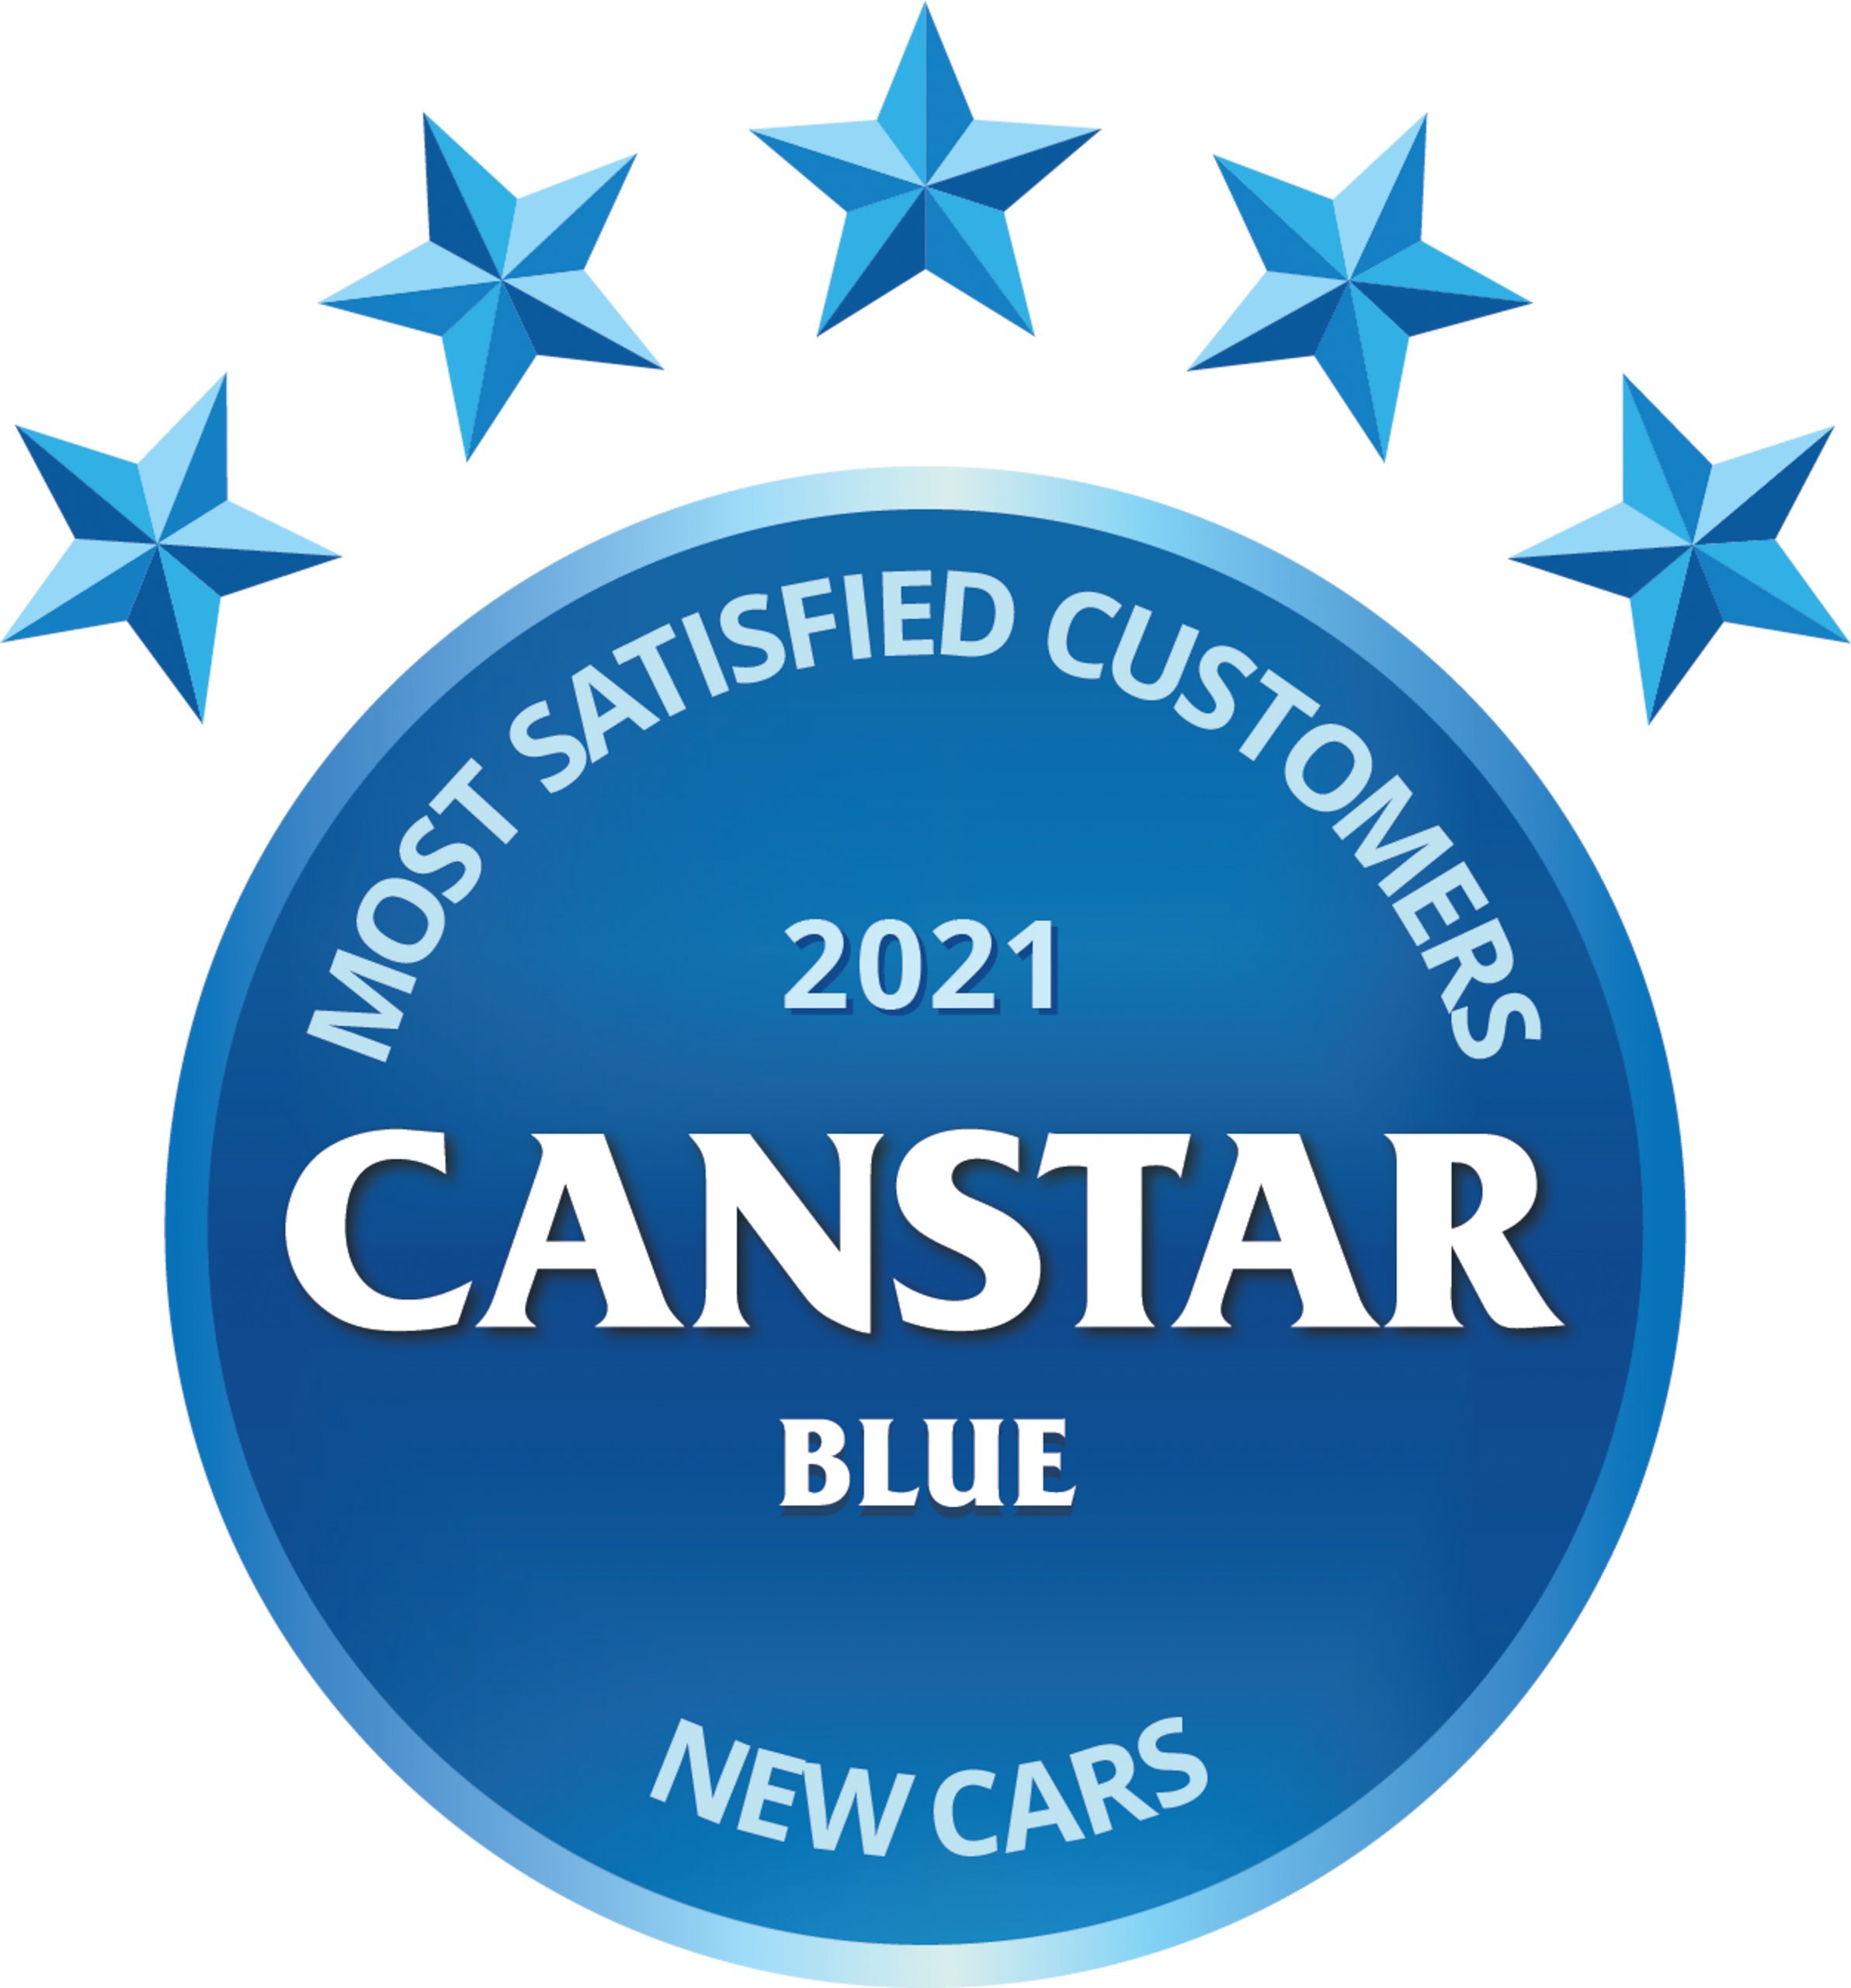 Canstar Blue Award for New Cars - awarded to Isuzu UTE.